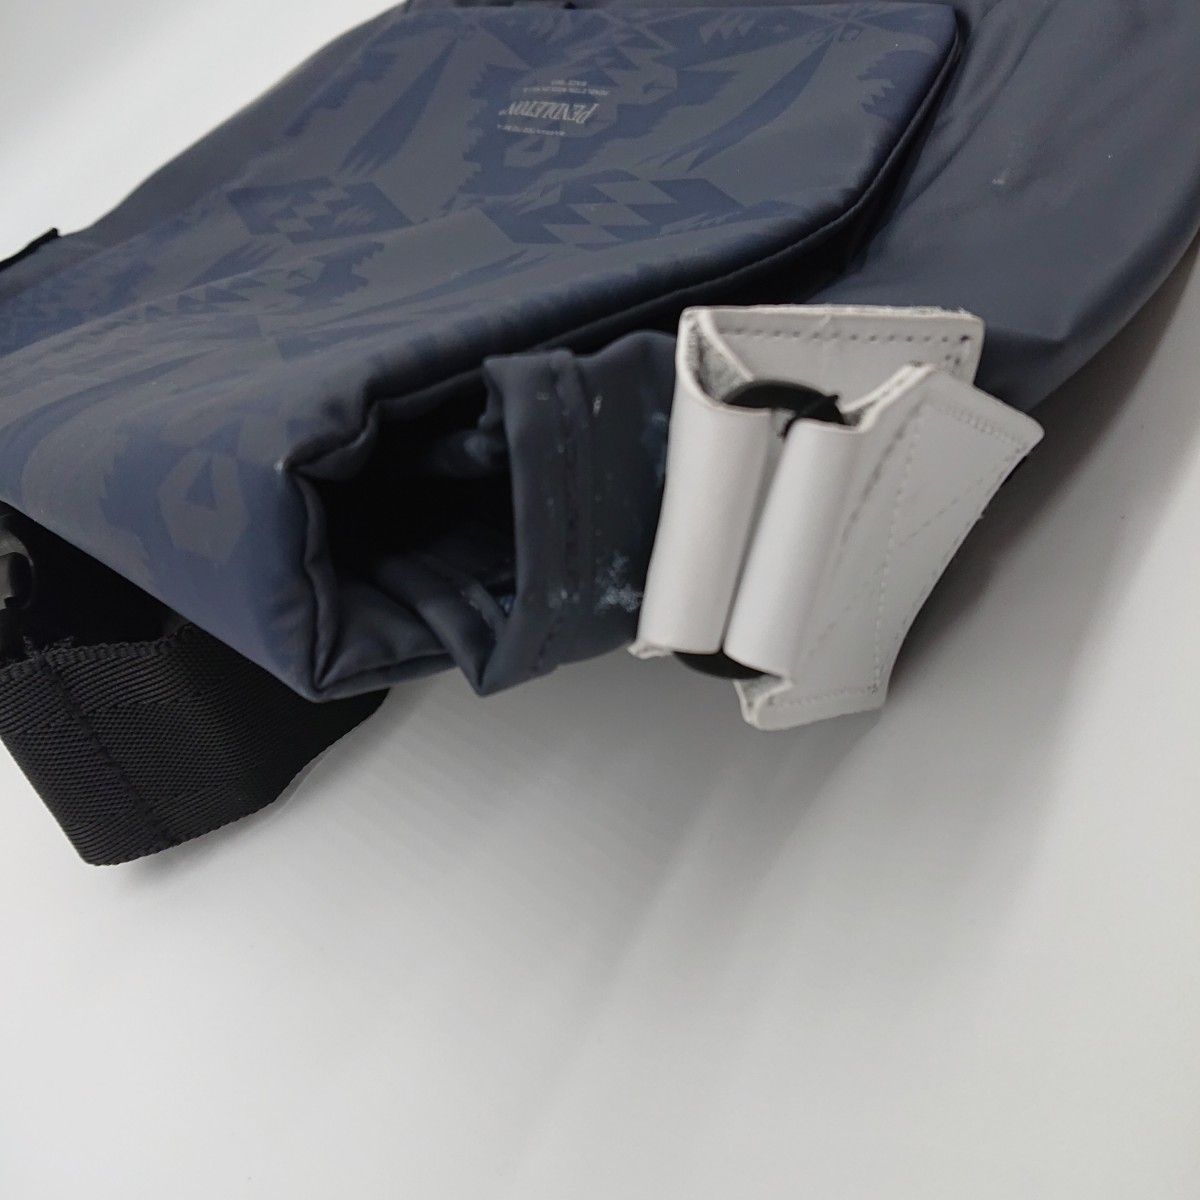 MILESTO PENDLETON メッセンジャーバッグ アウトレット品 ショルダーバッグ 斜めがけバッグ 大容量